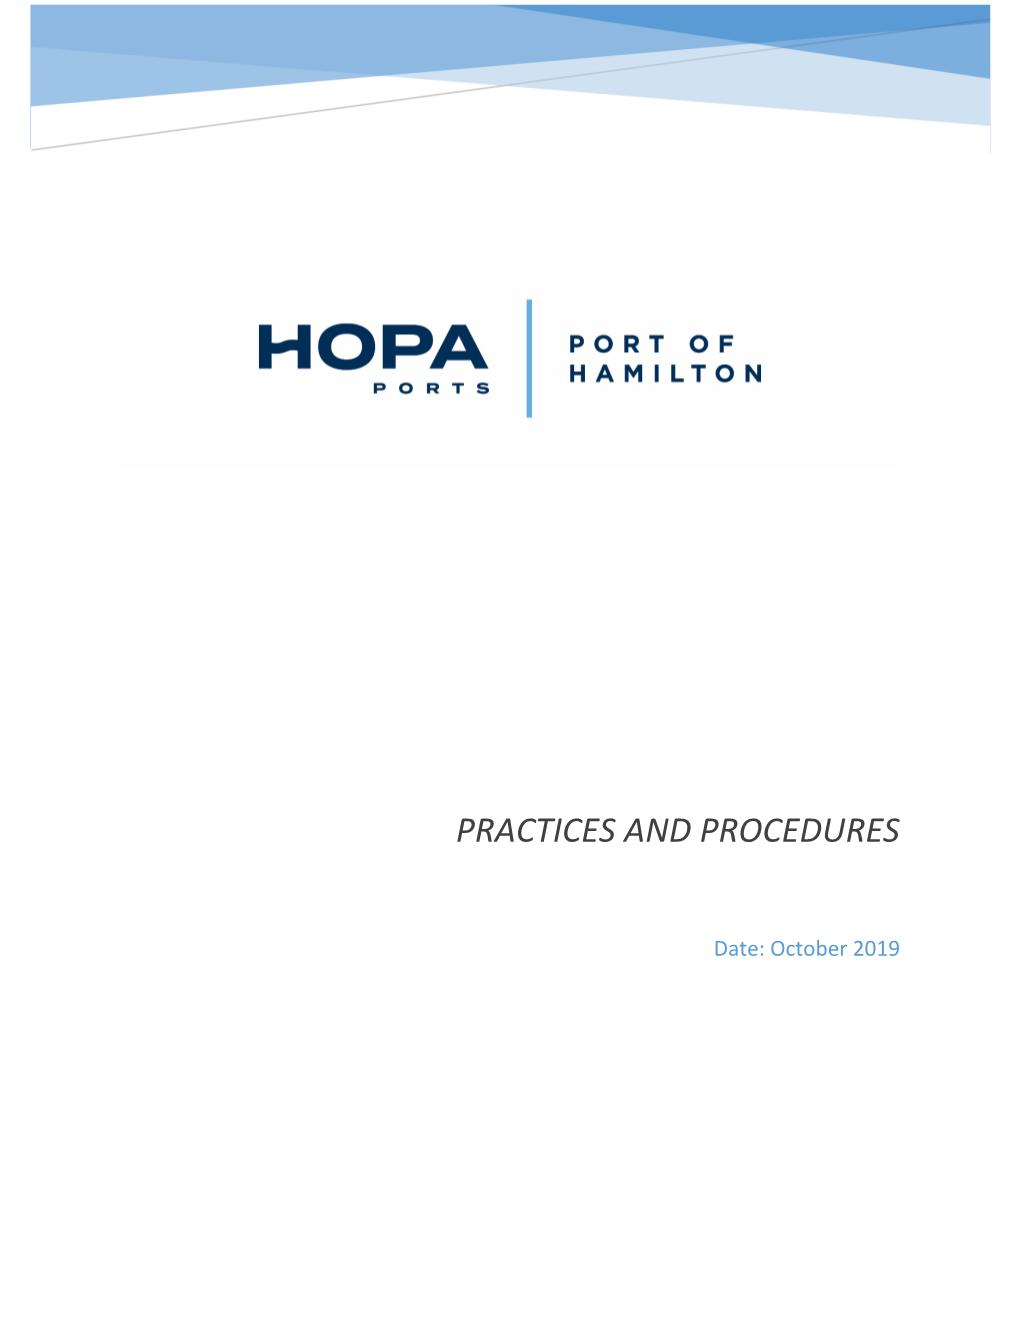 Port of Hamilton Practices and Procedures